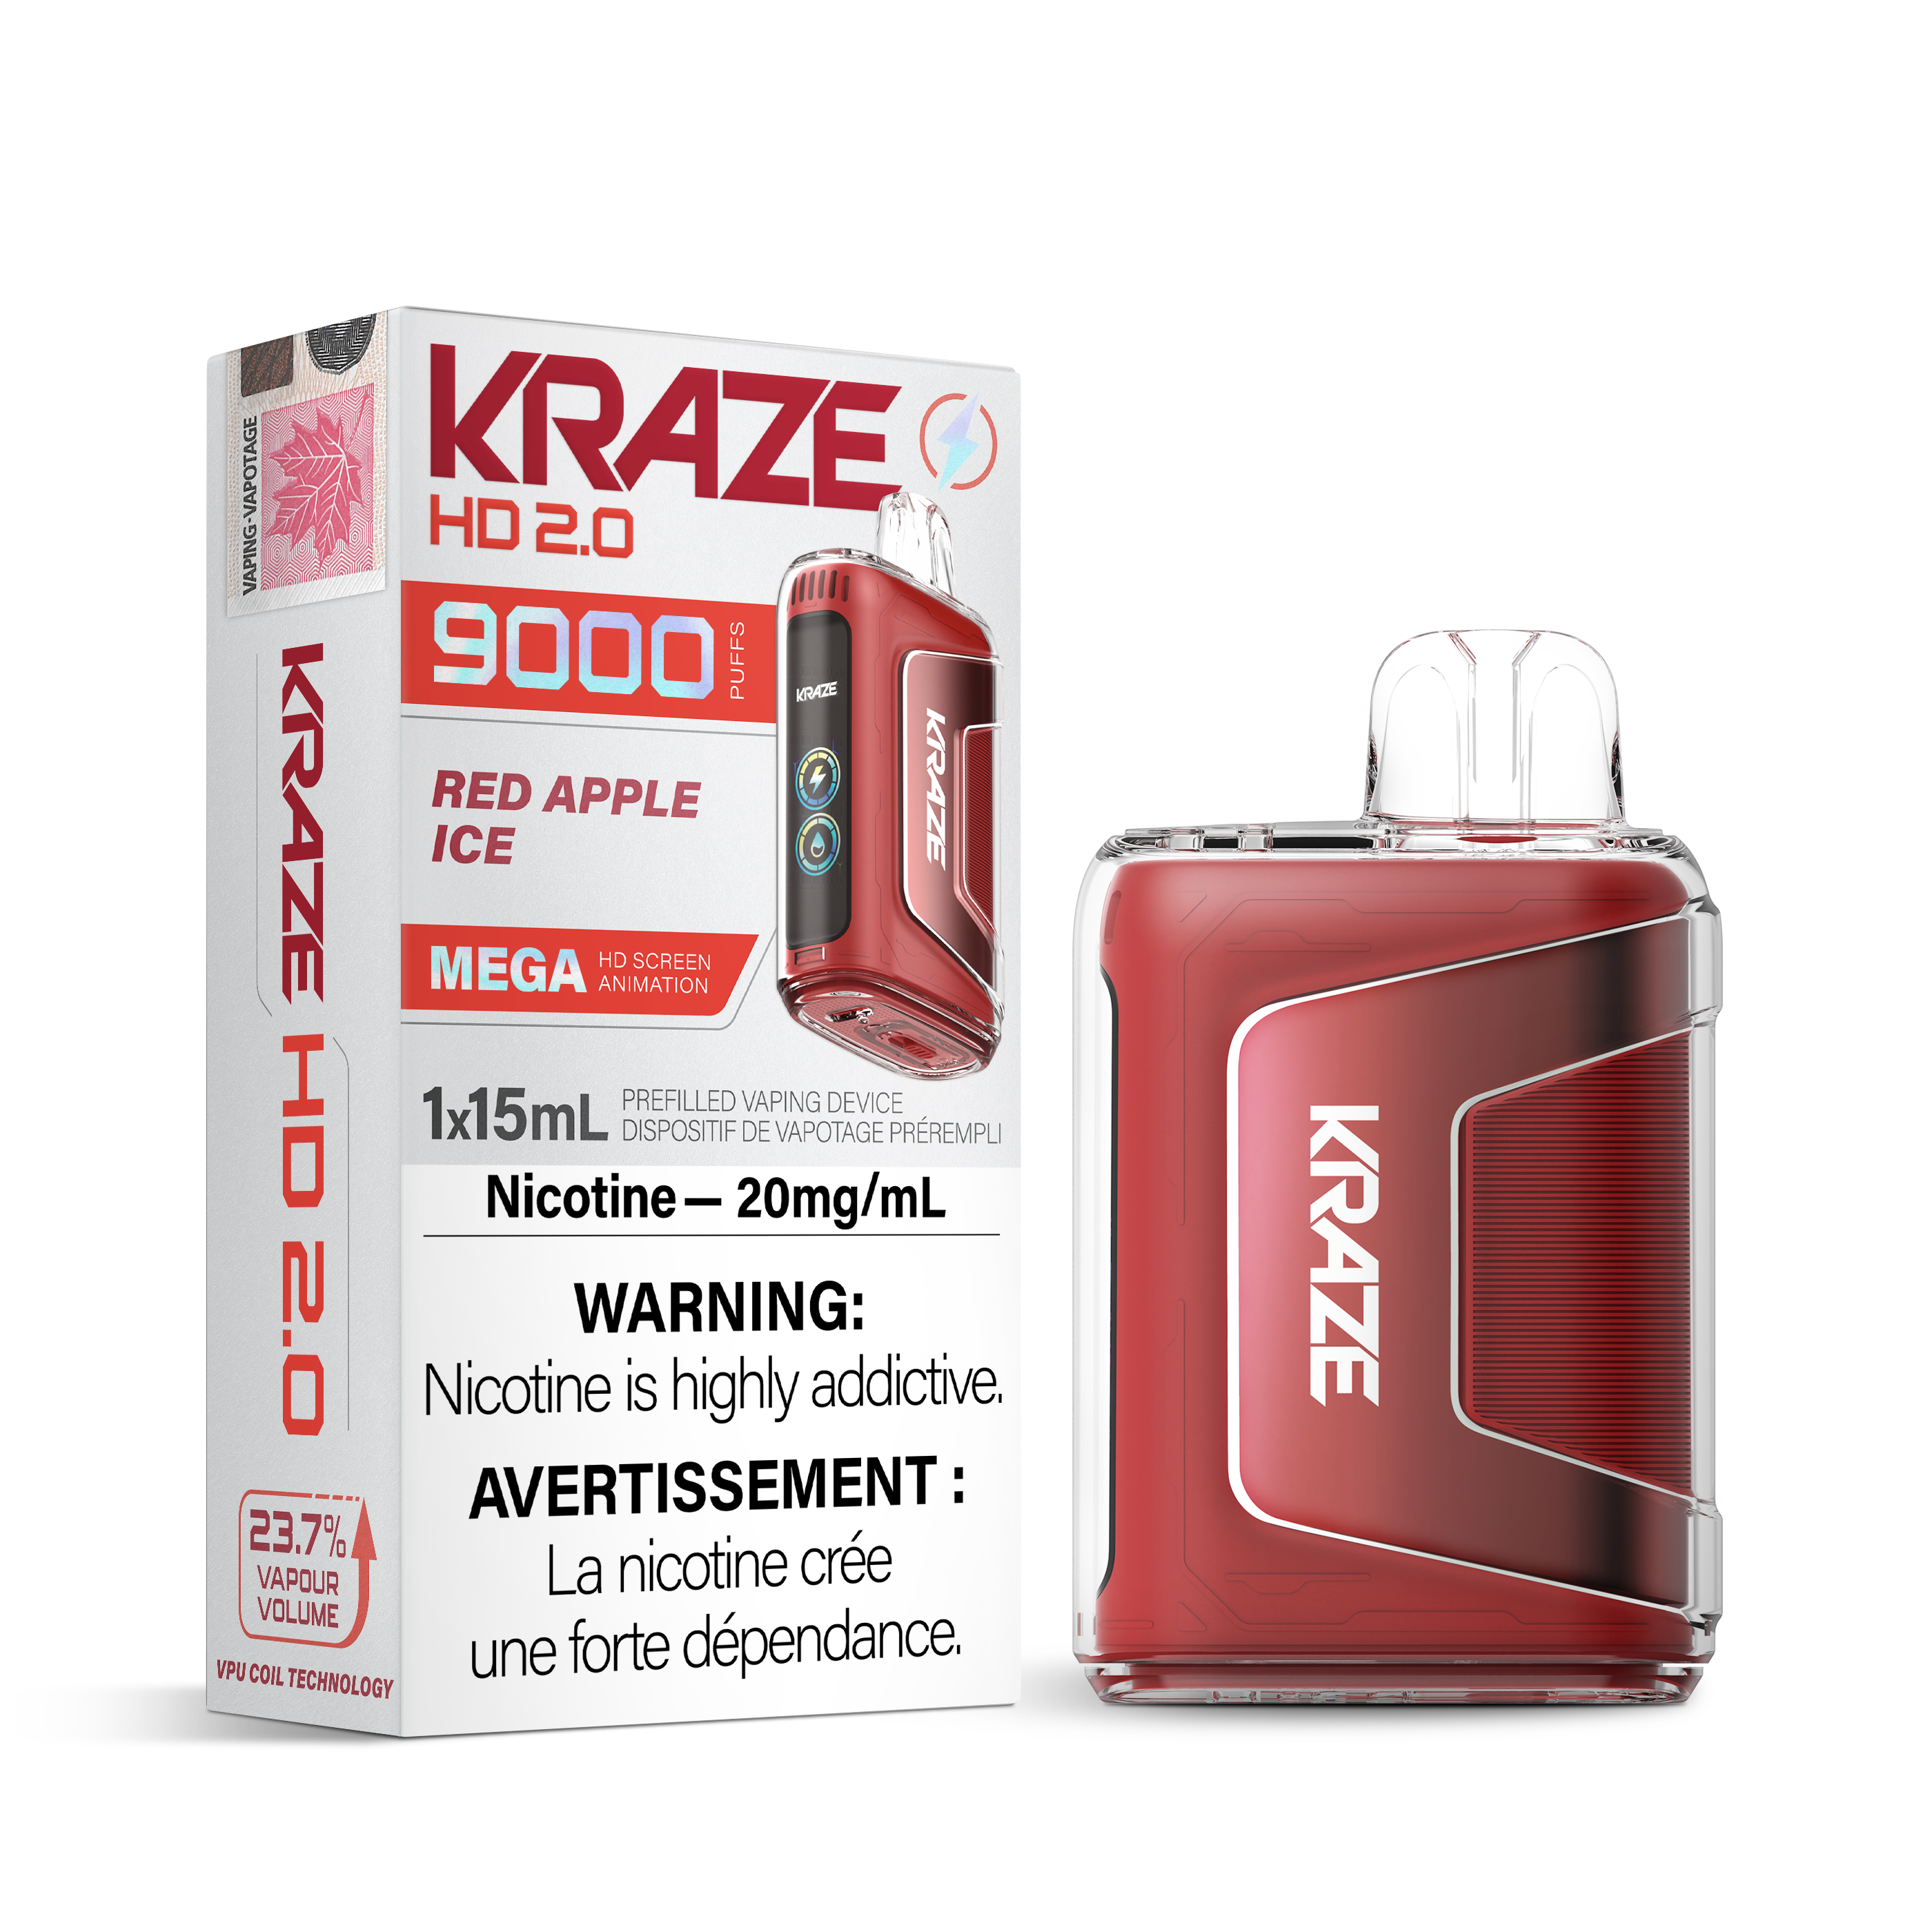 KRAZE HD 2.0 9000 RED APPLE ICE 20MG